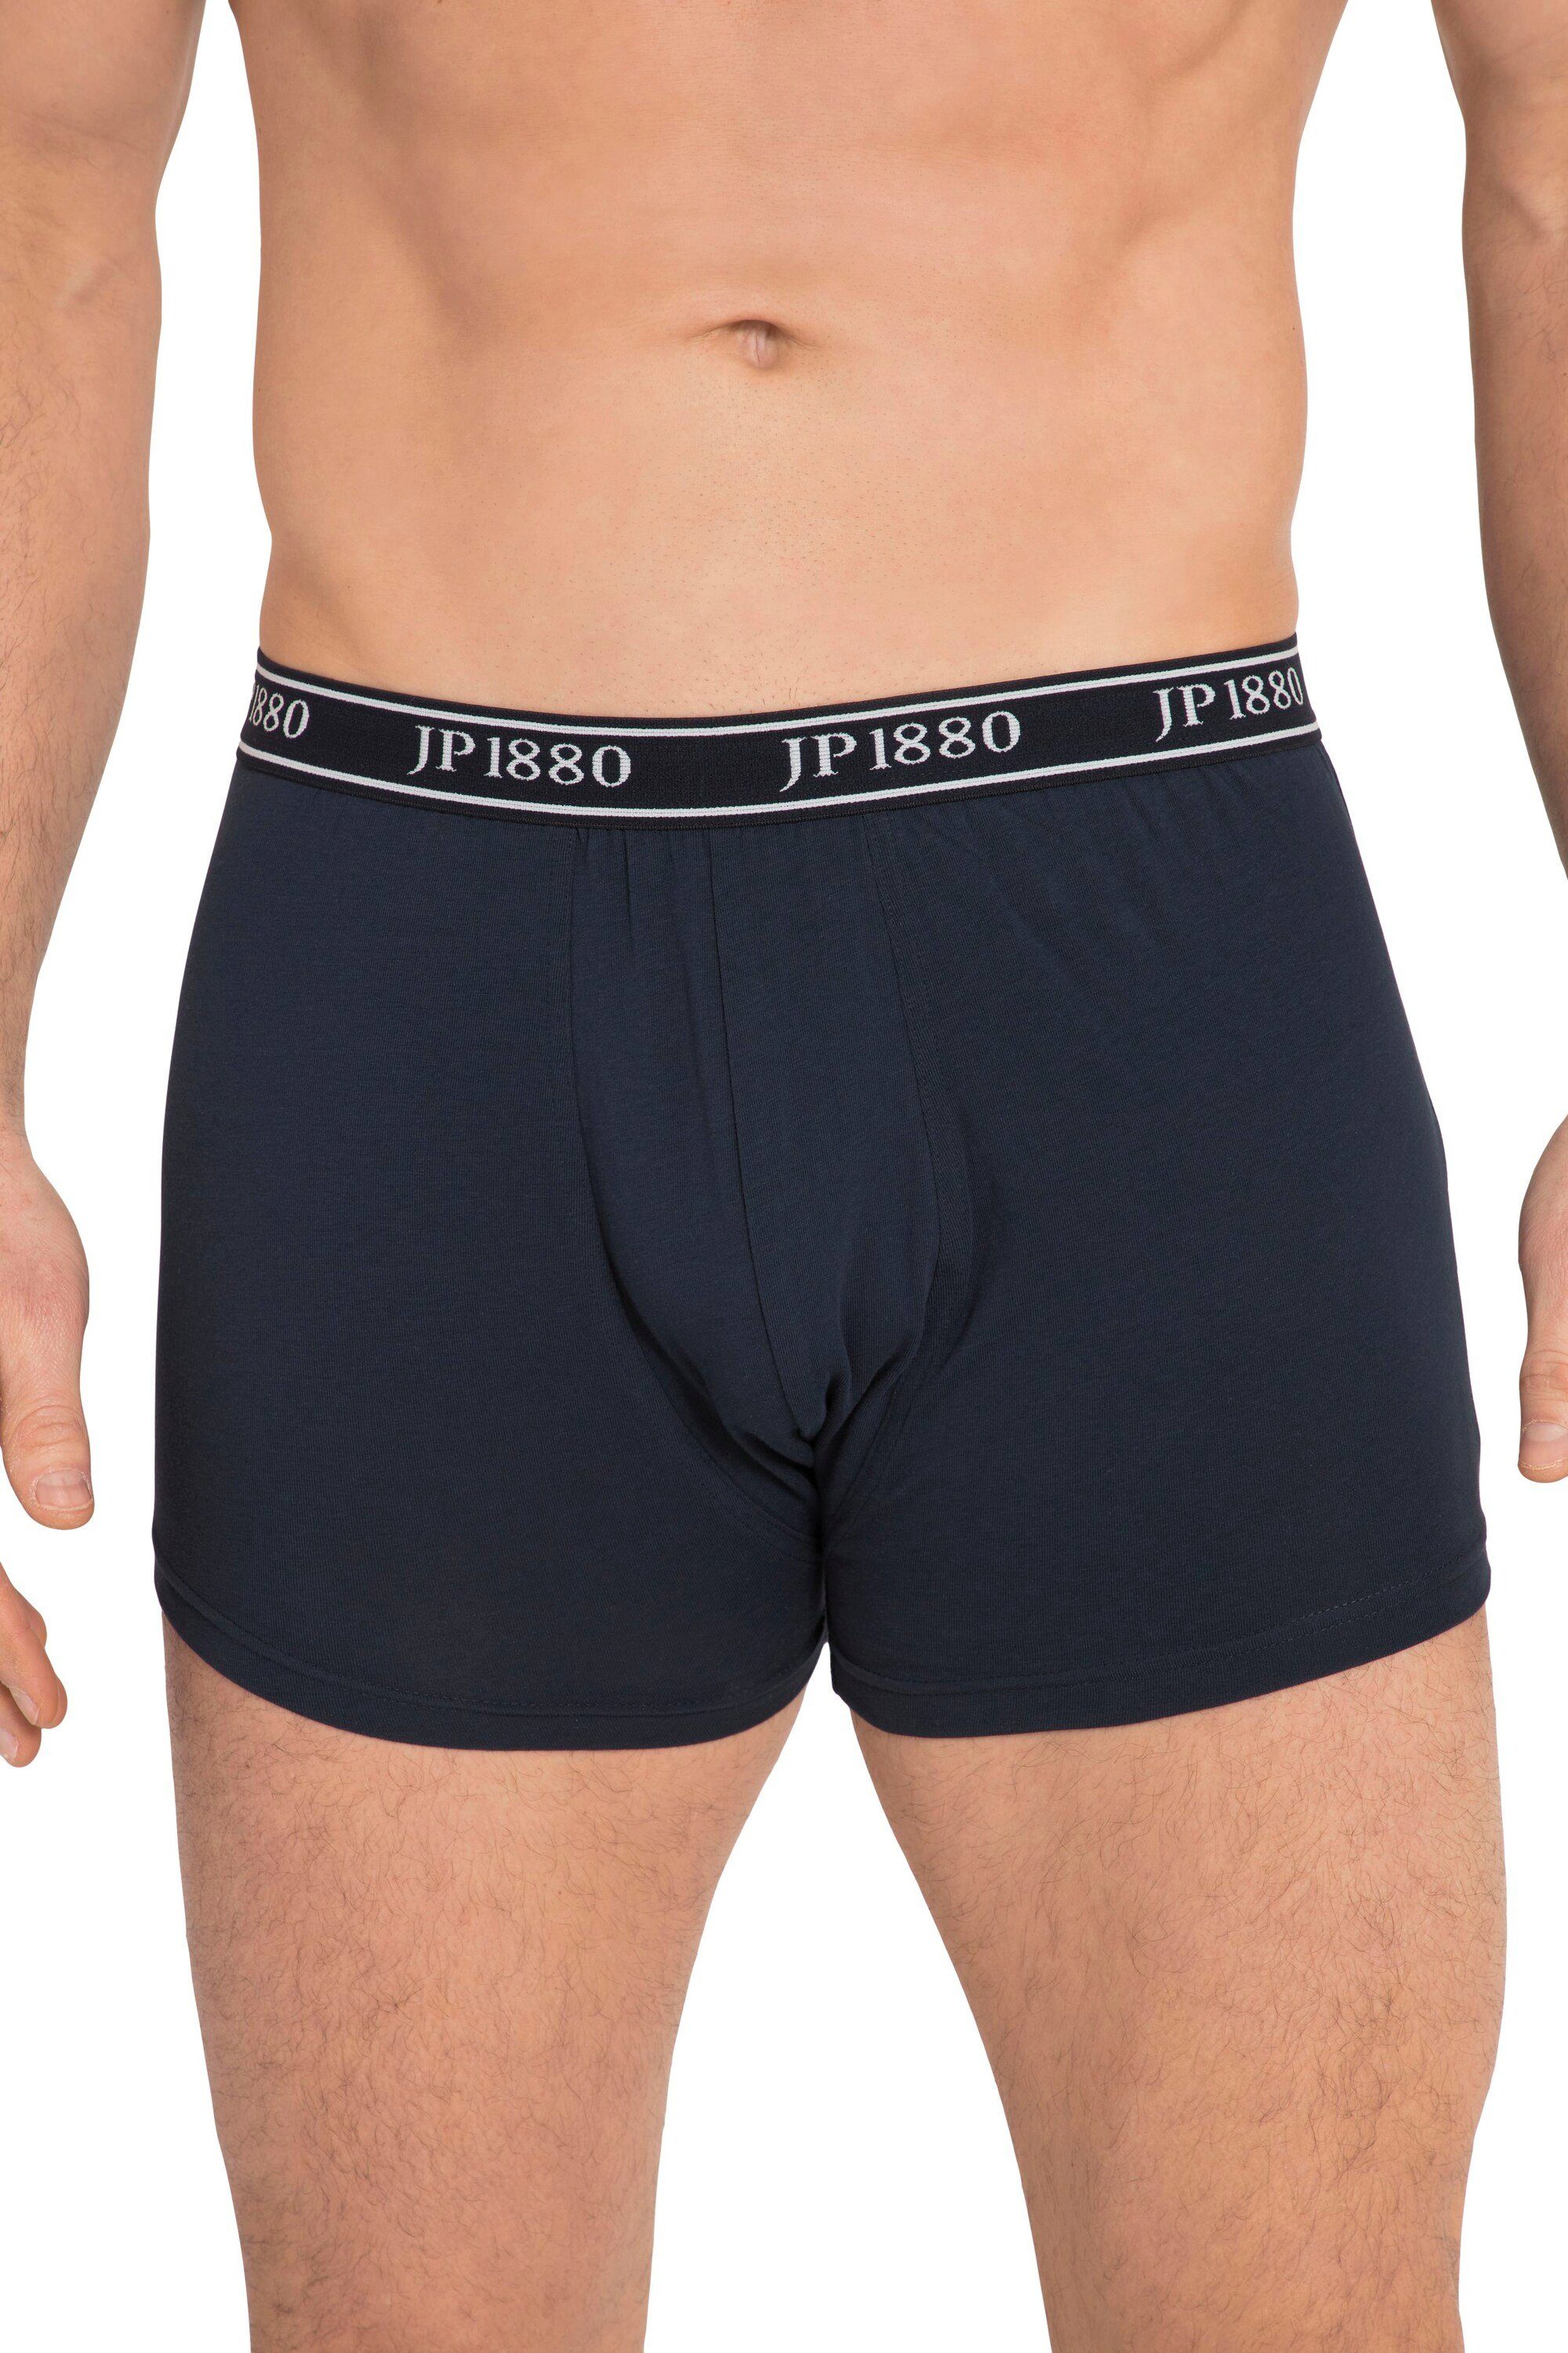 FLEXNAMIC® Hip-Pants Boxershorts 2er-Pack JP1880 Unterhose